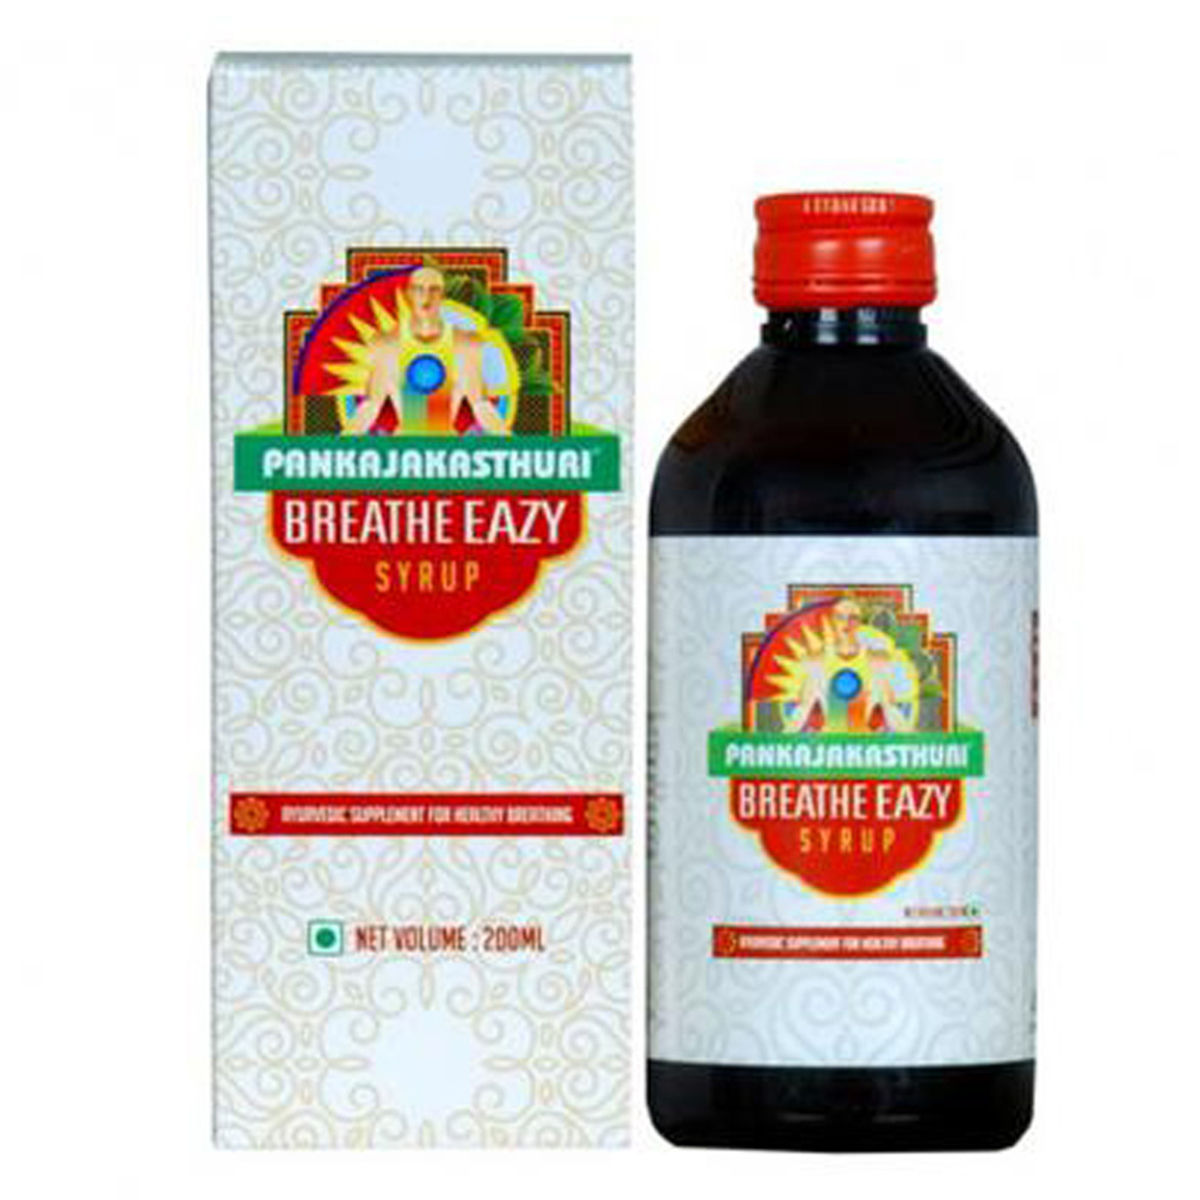 Buy Pankajakasthuri Breathe Easy Syrup, 200 ml Online